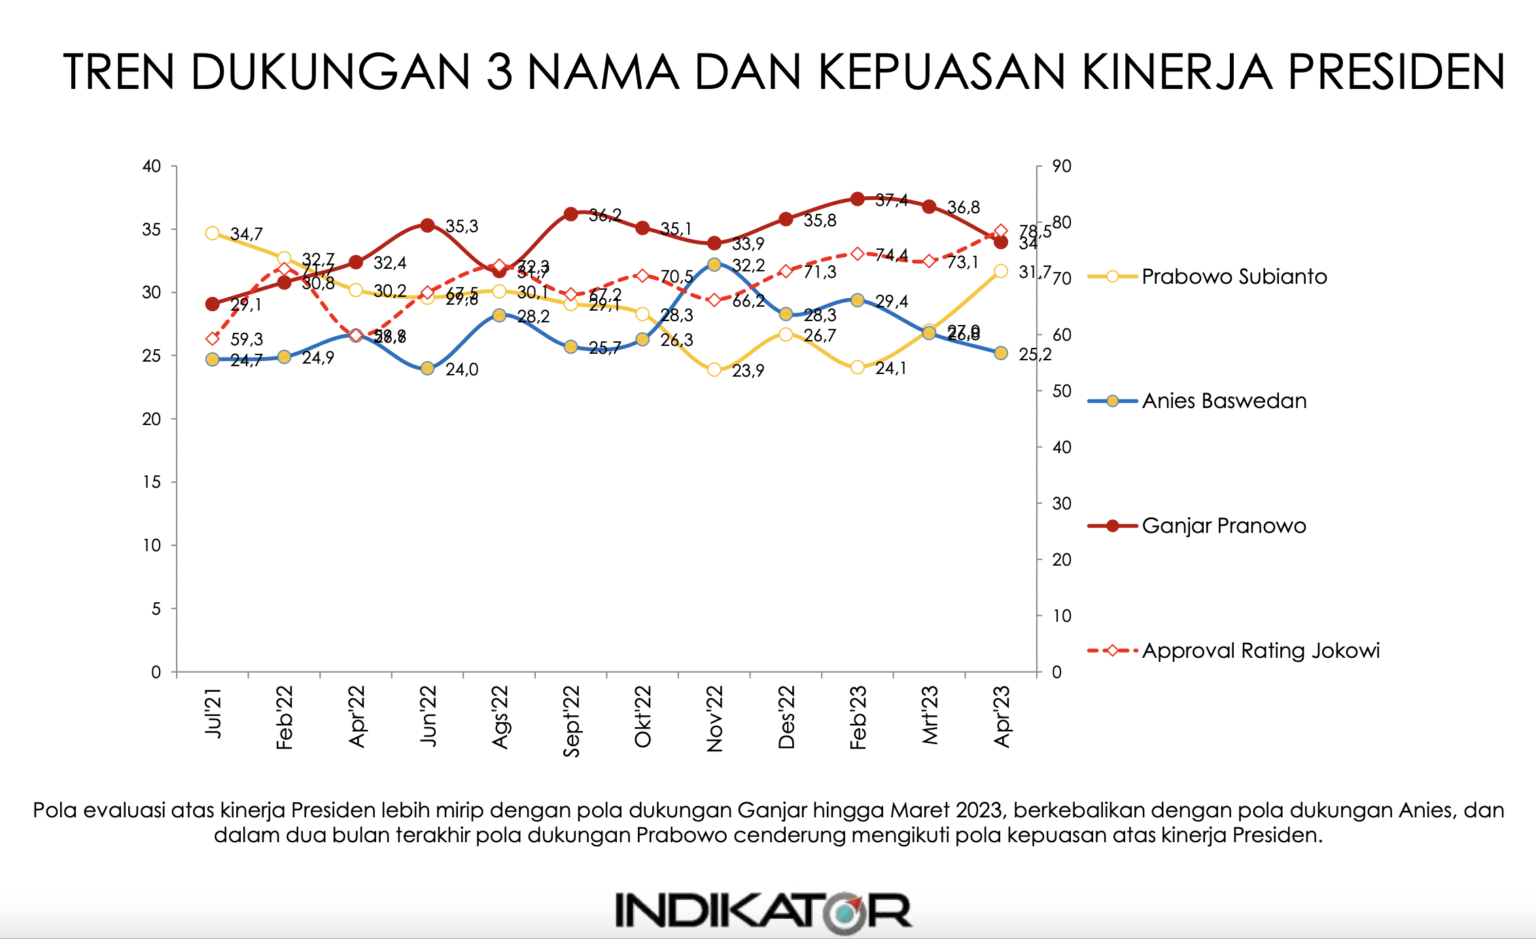 Survei Indikator untuk simulasi 3 nama, Ganjar Pranowo, Prabowo Subianto dan Anies Baswedan.